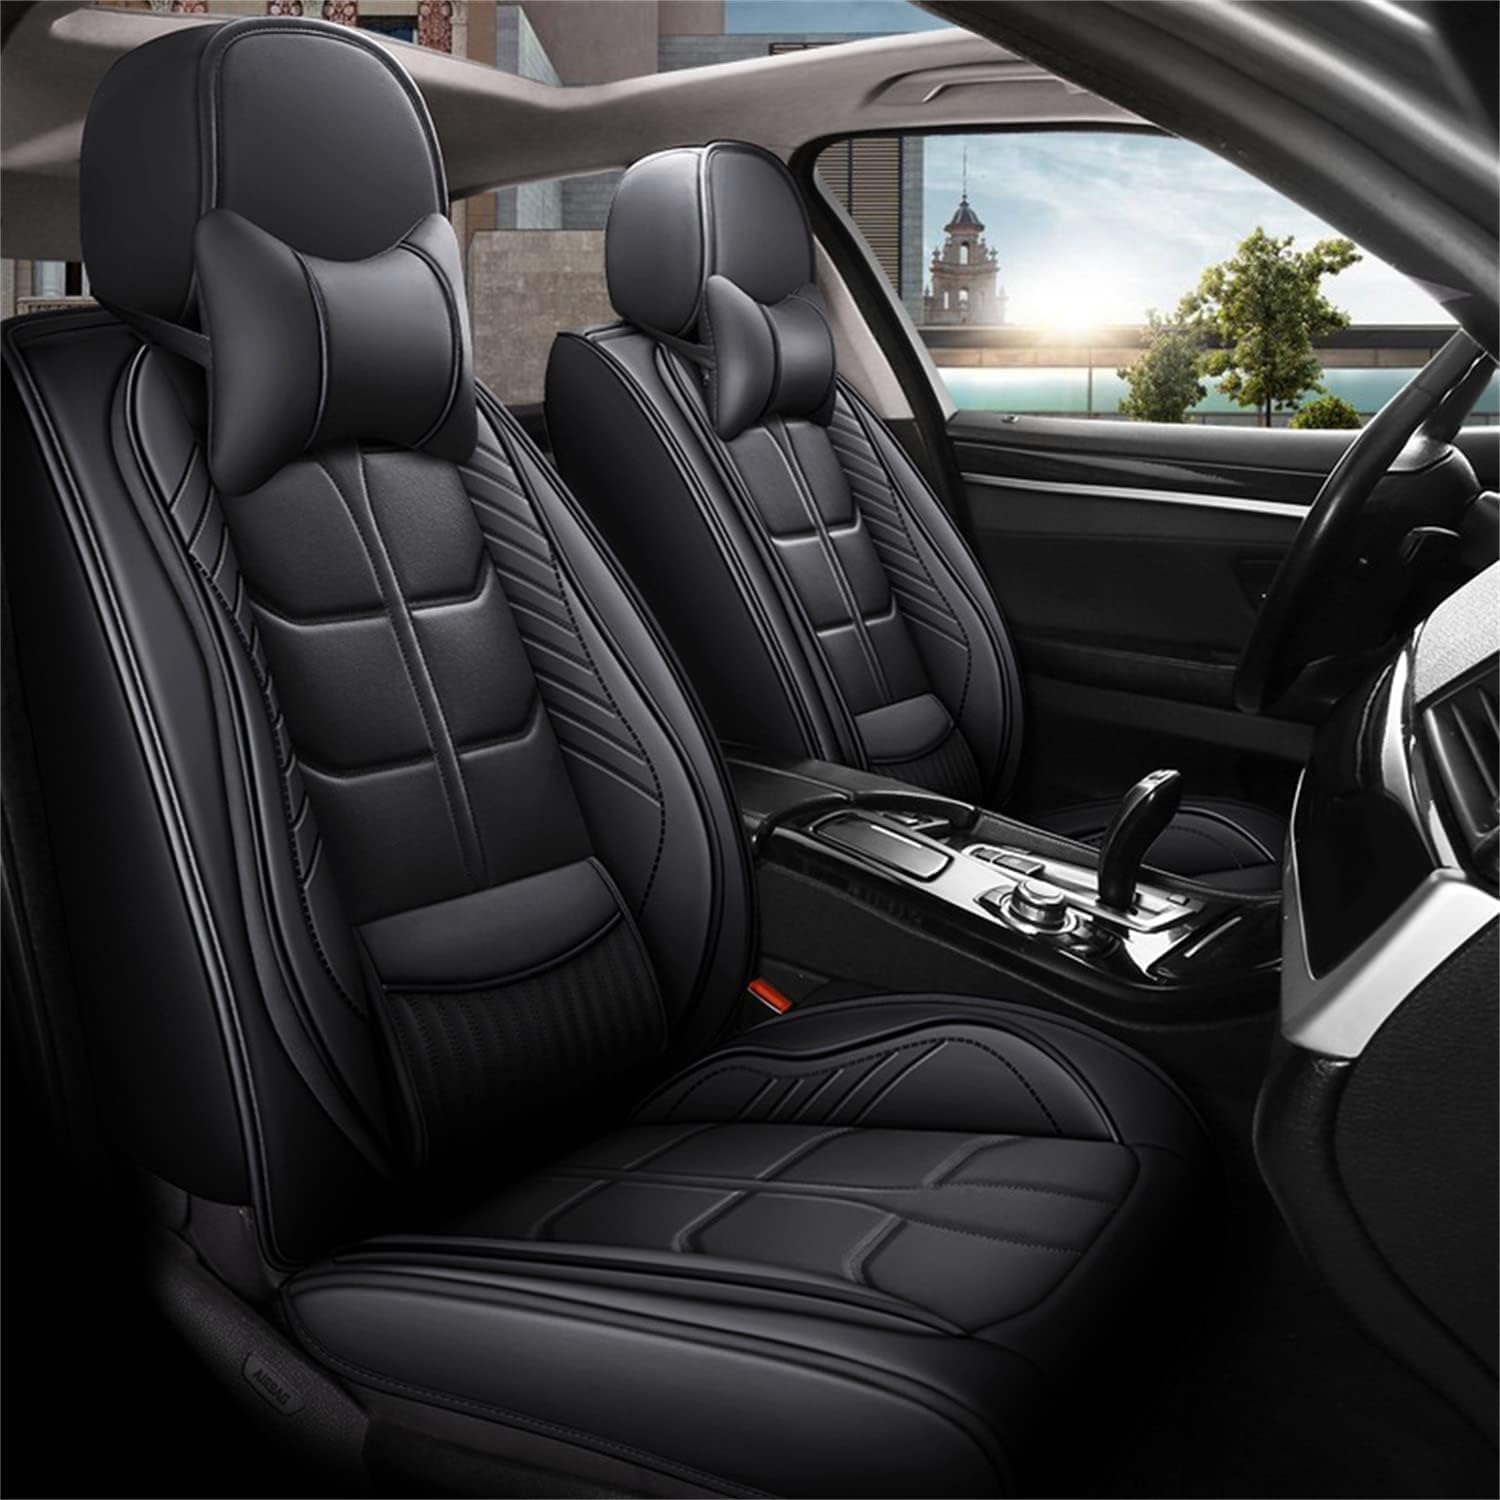 NPORT Auto PU-Leder Sitzbezüge Sets für Infiniti QX70 2013-2018, Komfortabler Dauerhafter Sitzbezug Vordersitze Rücksitze Autositzschoner,A/Black-Nopillow von NPORT